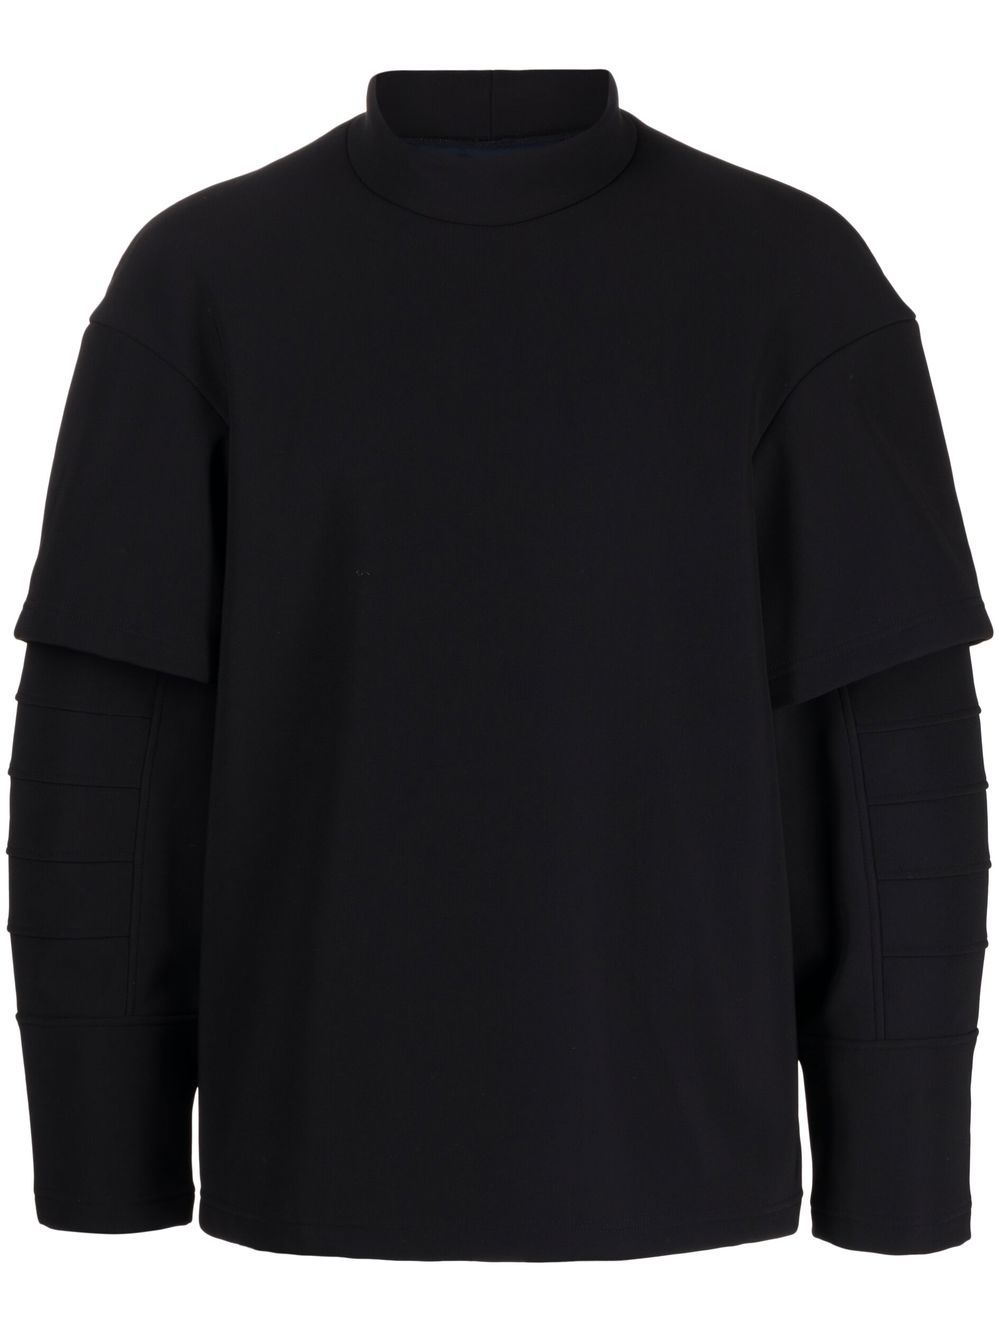 Anrealage layered stand-up collar sweatshirt